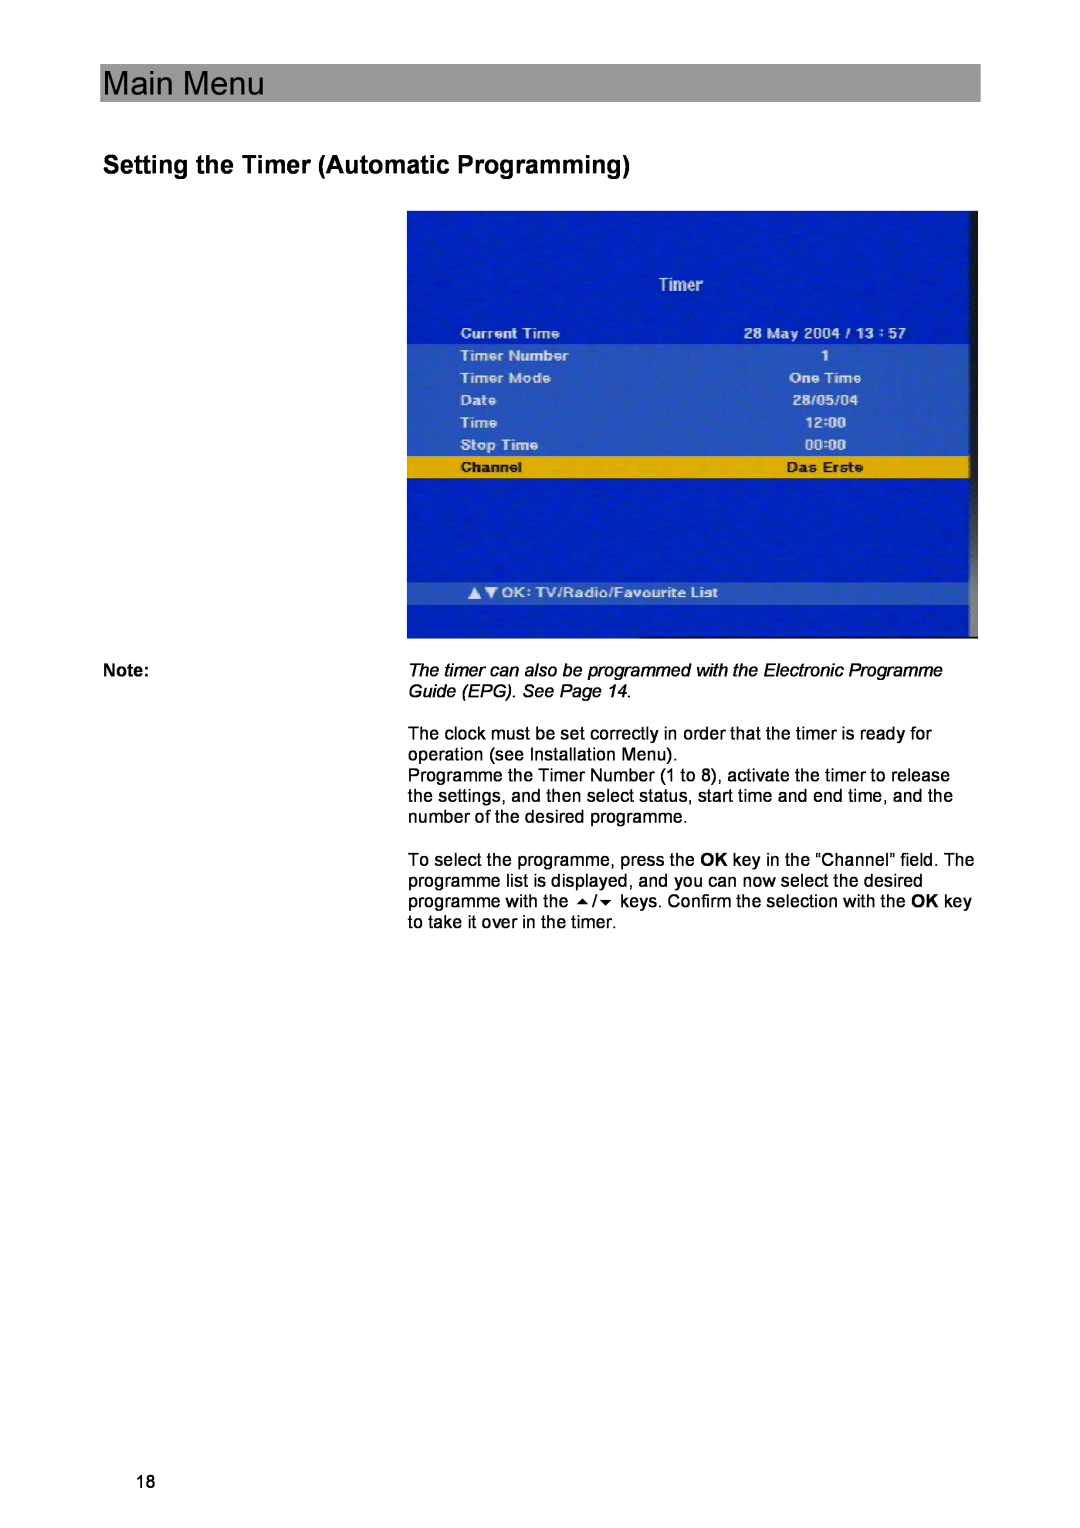 Kathrein UFE 371/S manual Setting the Timer Automatic Programming, Main Menu 